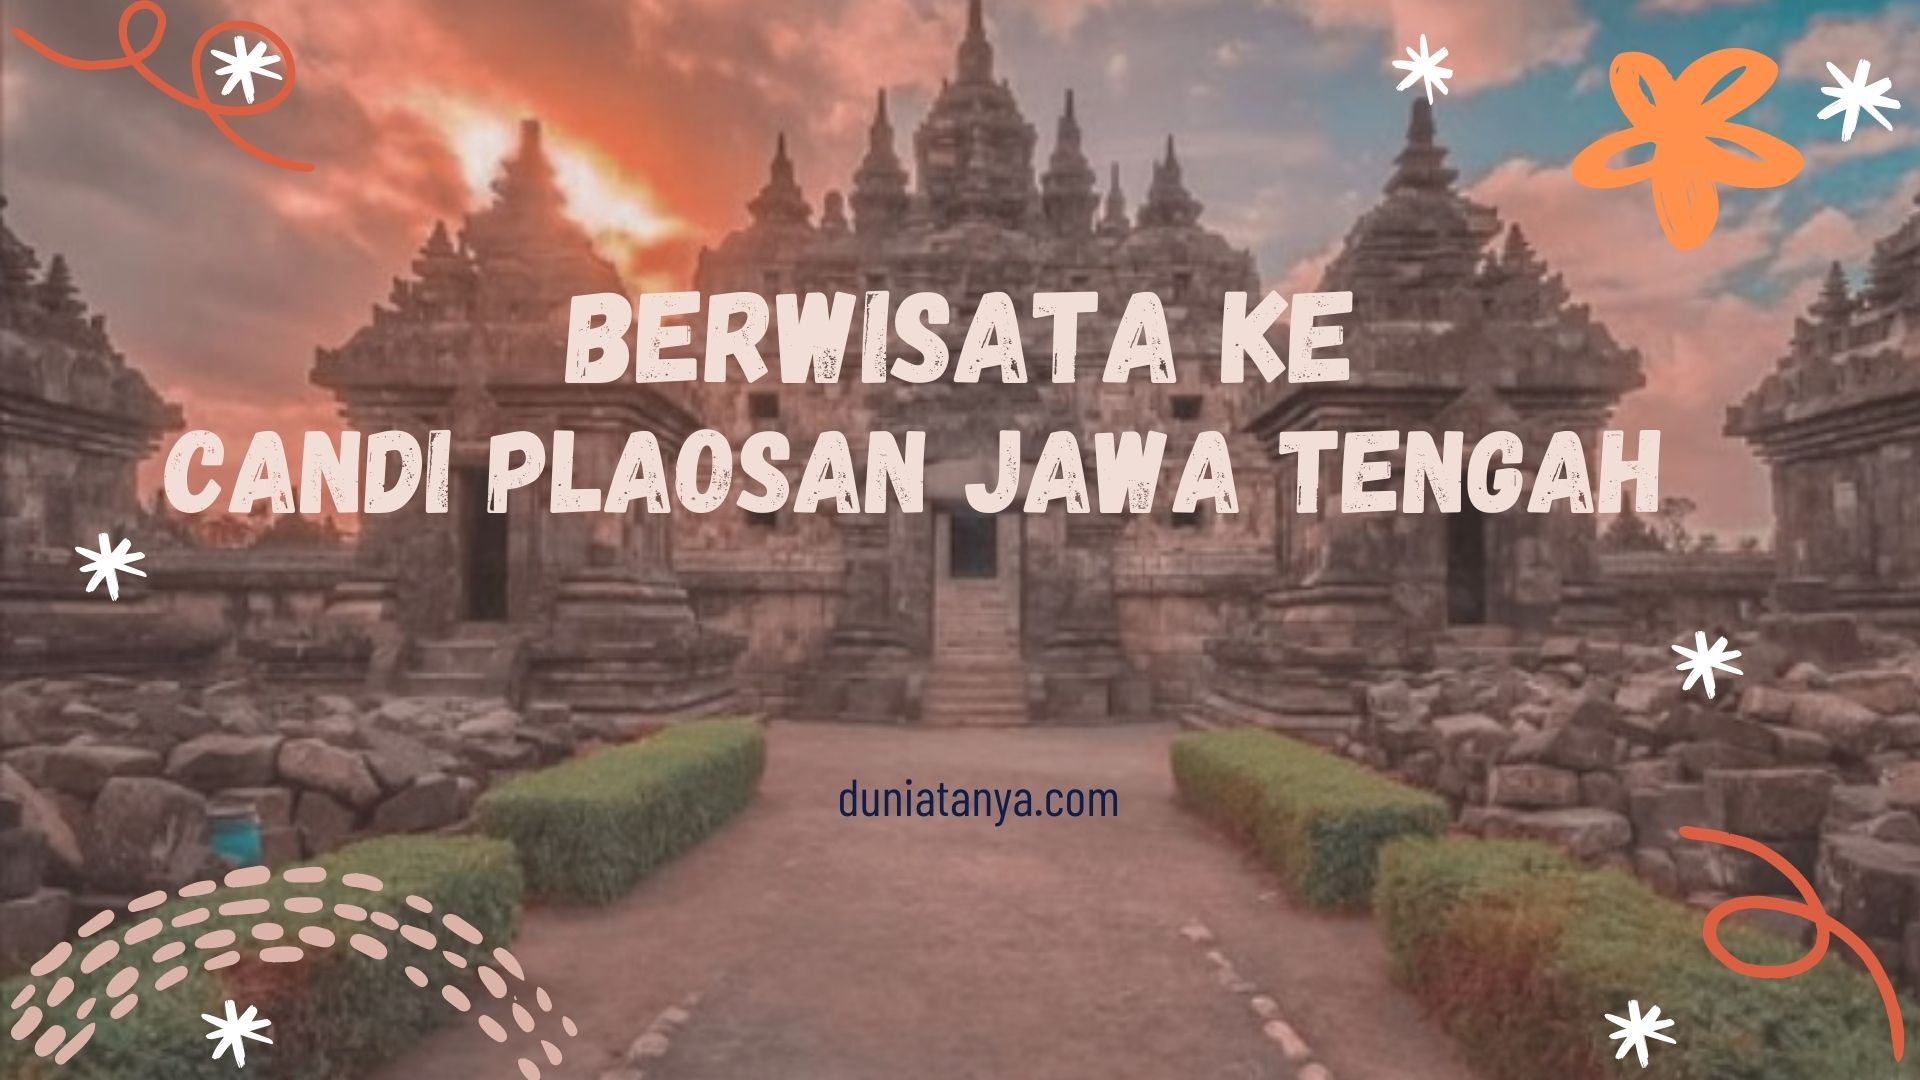 You are currently viewing Berwisata Ke Candi Plaosan Jawa Tengah